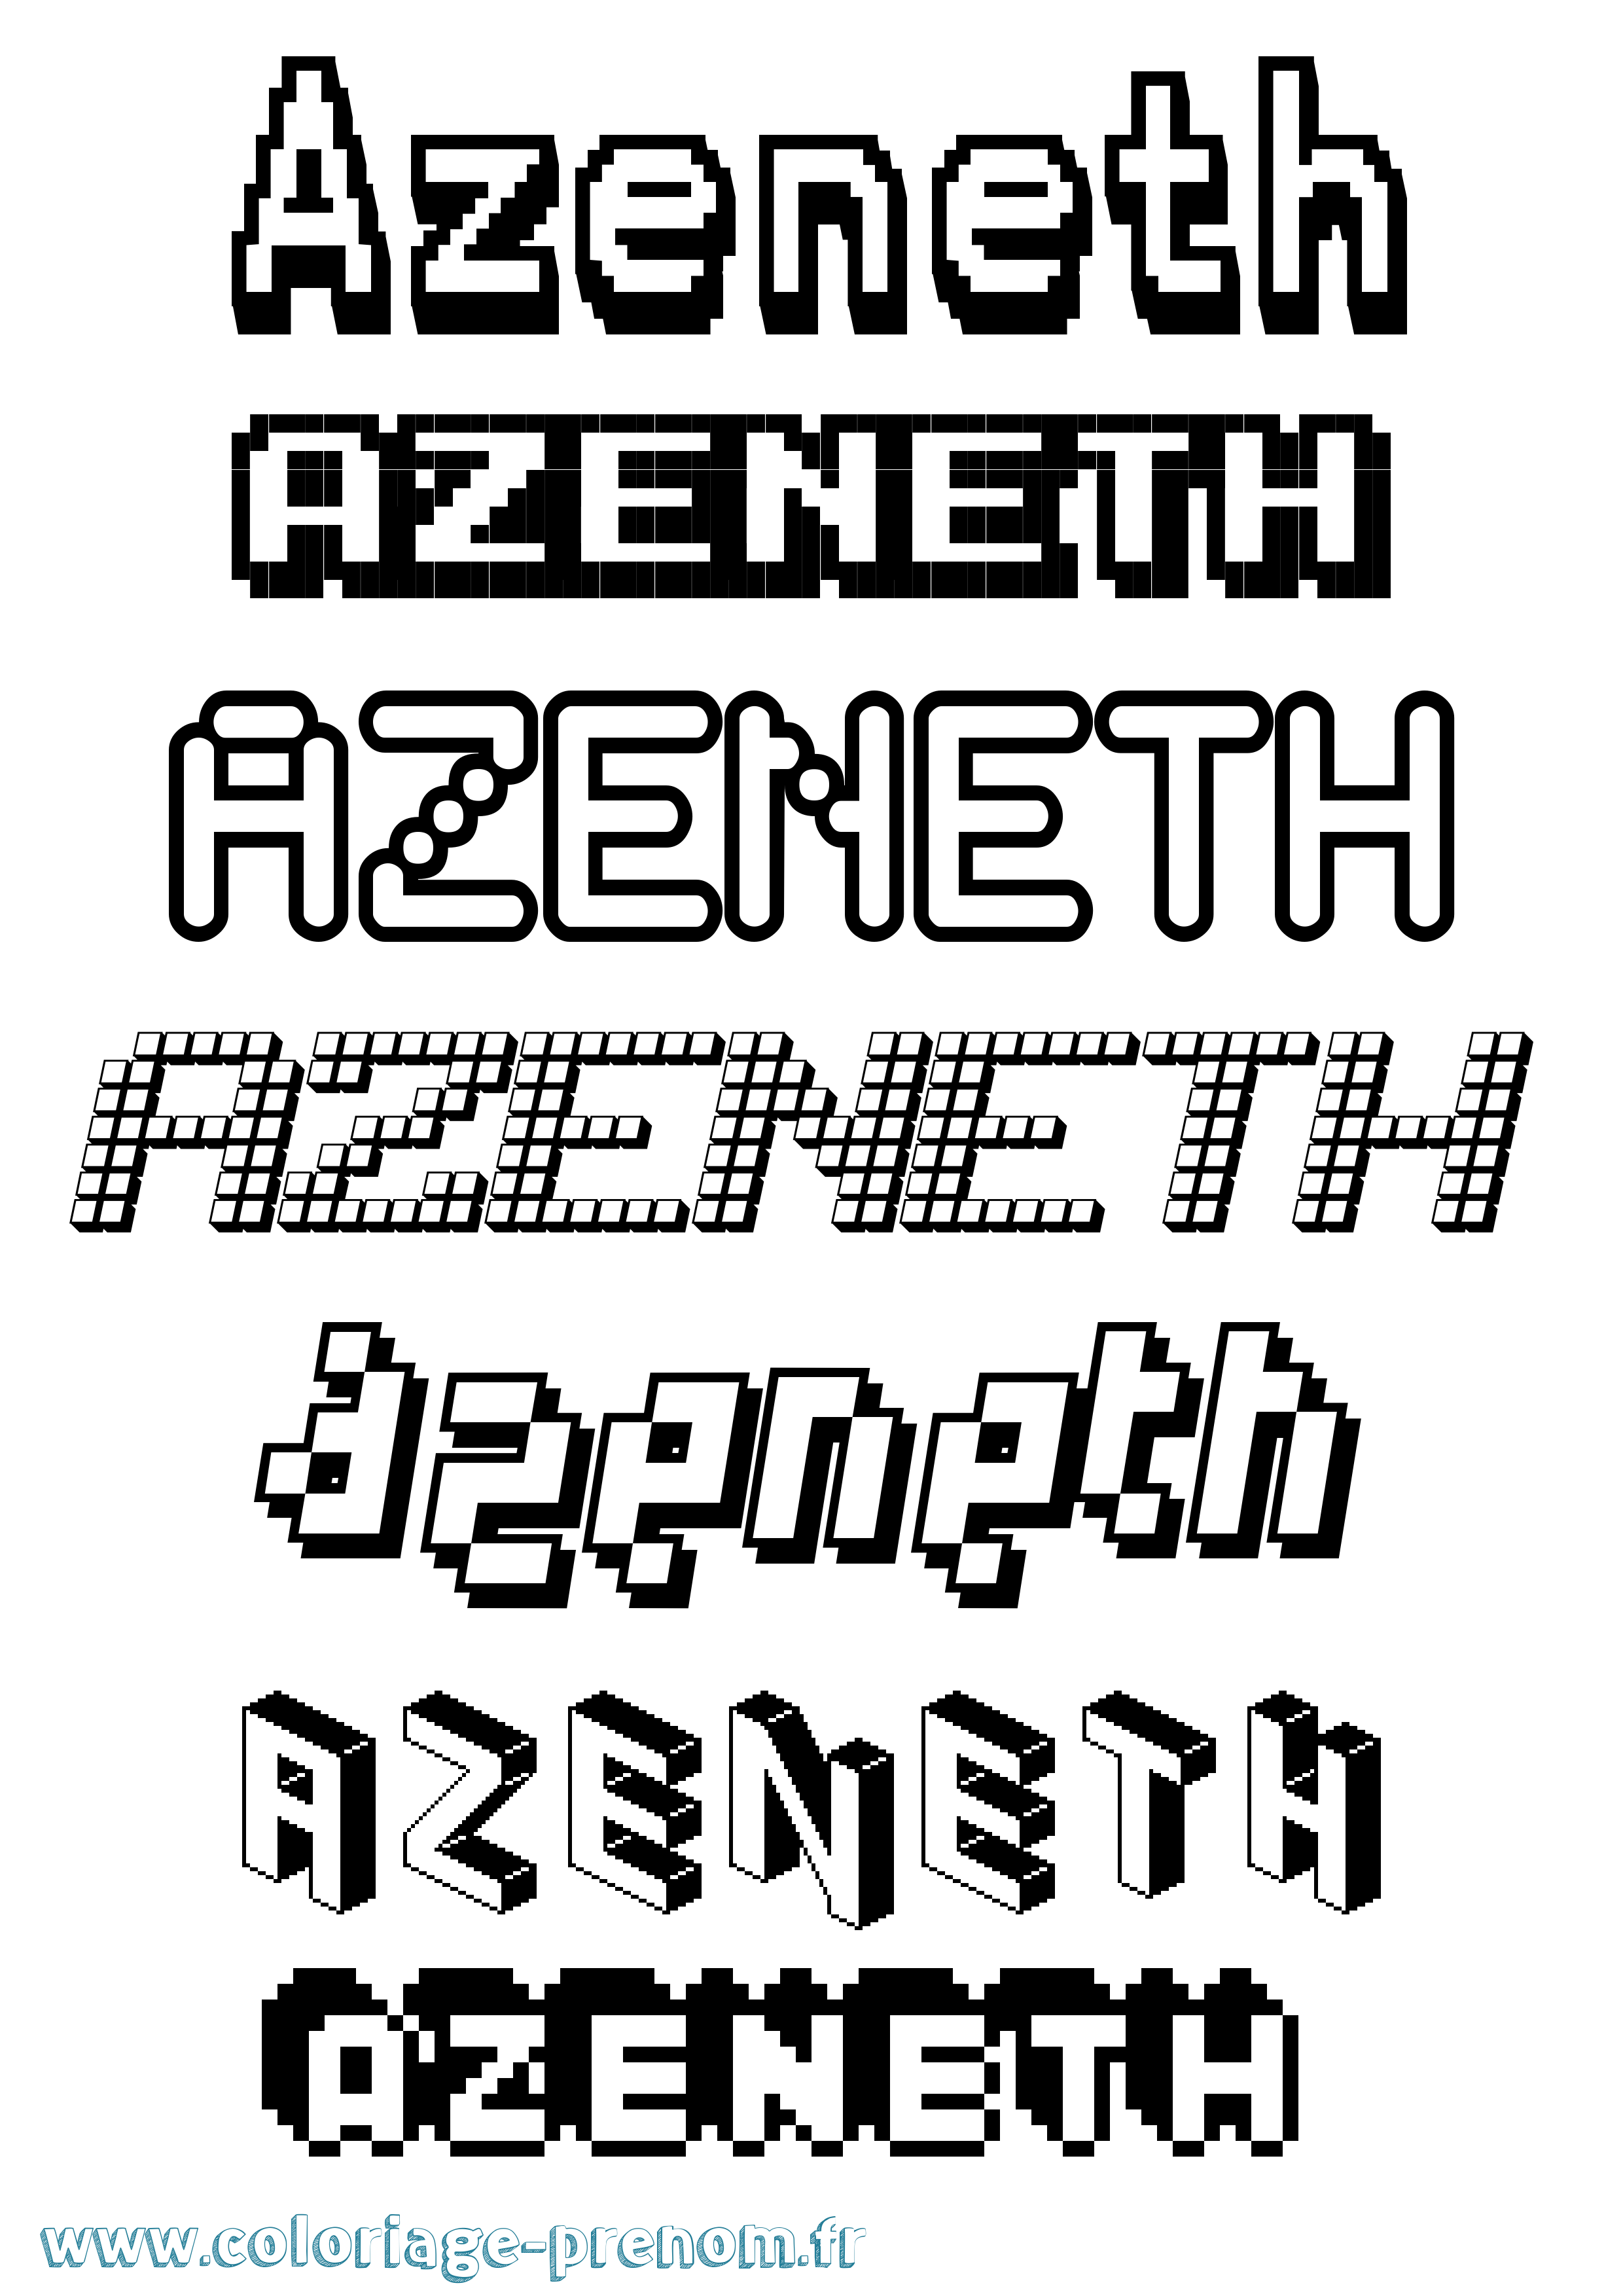 Coloriage prénom Azeneth Pixel